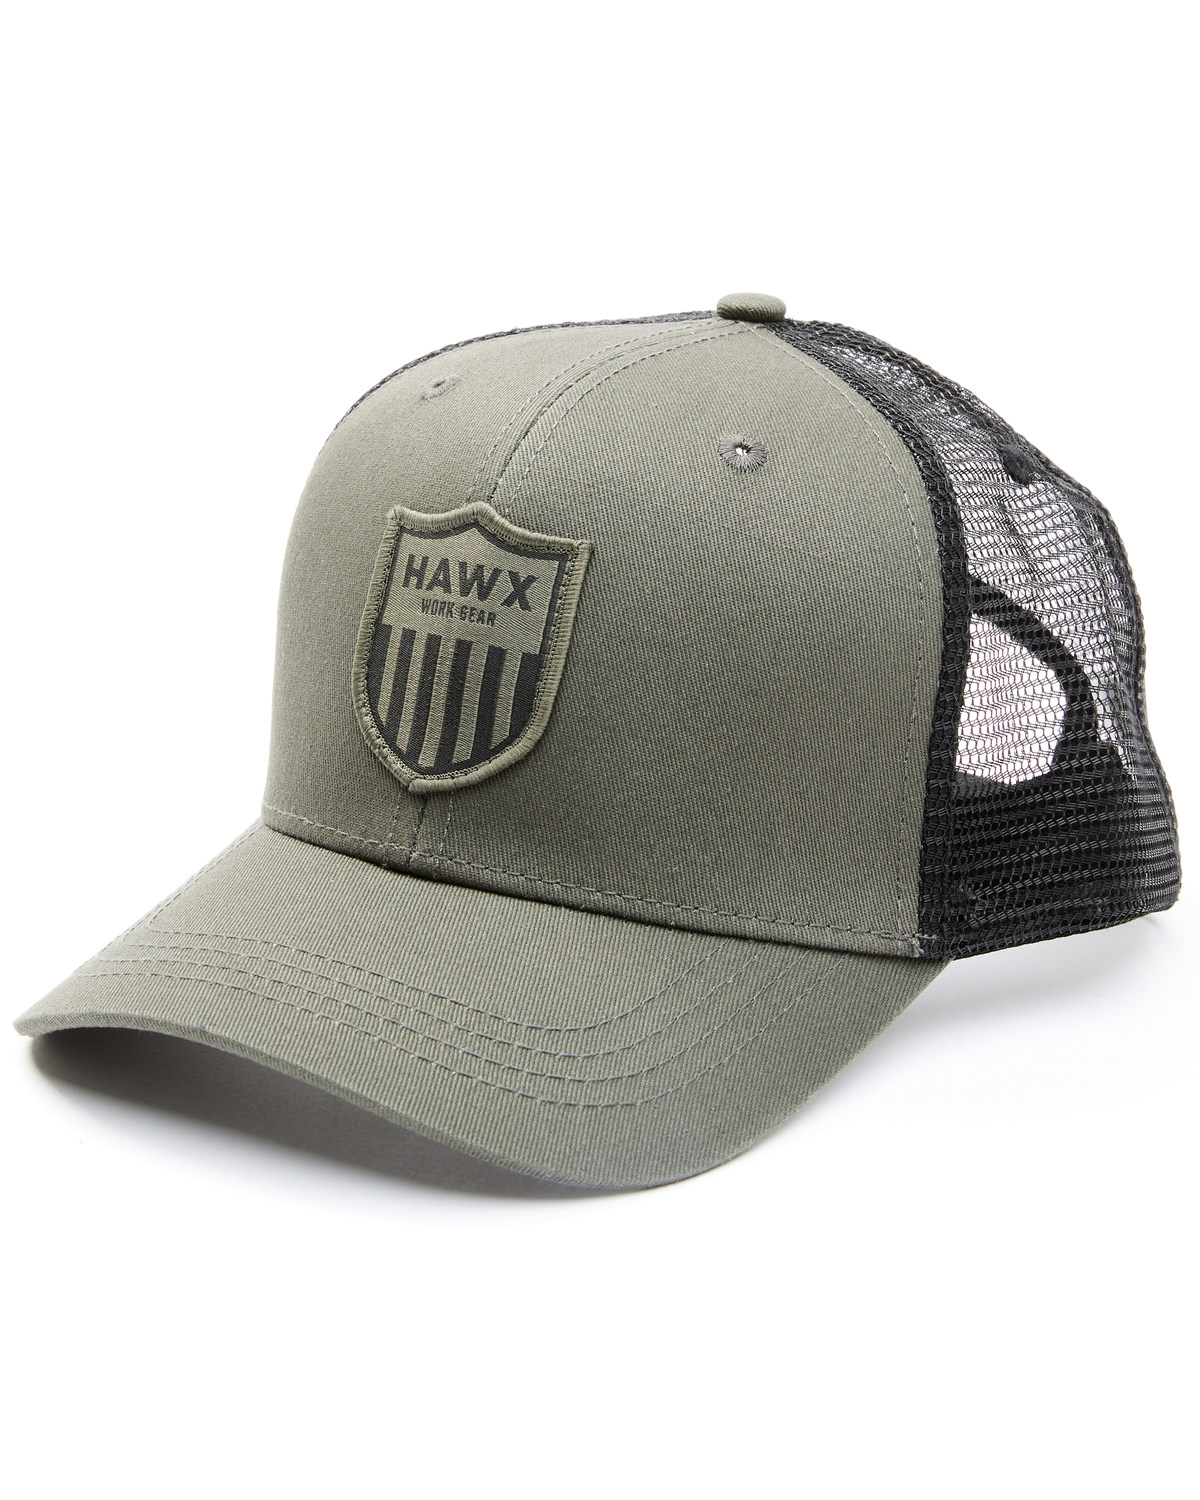 Hawx Men's Olive Shield Logo Patch Mesh-Back Ball Cap